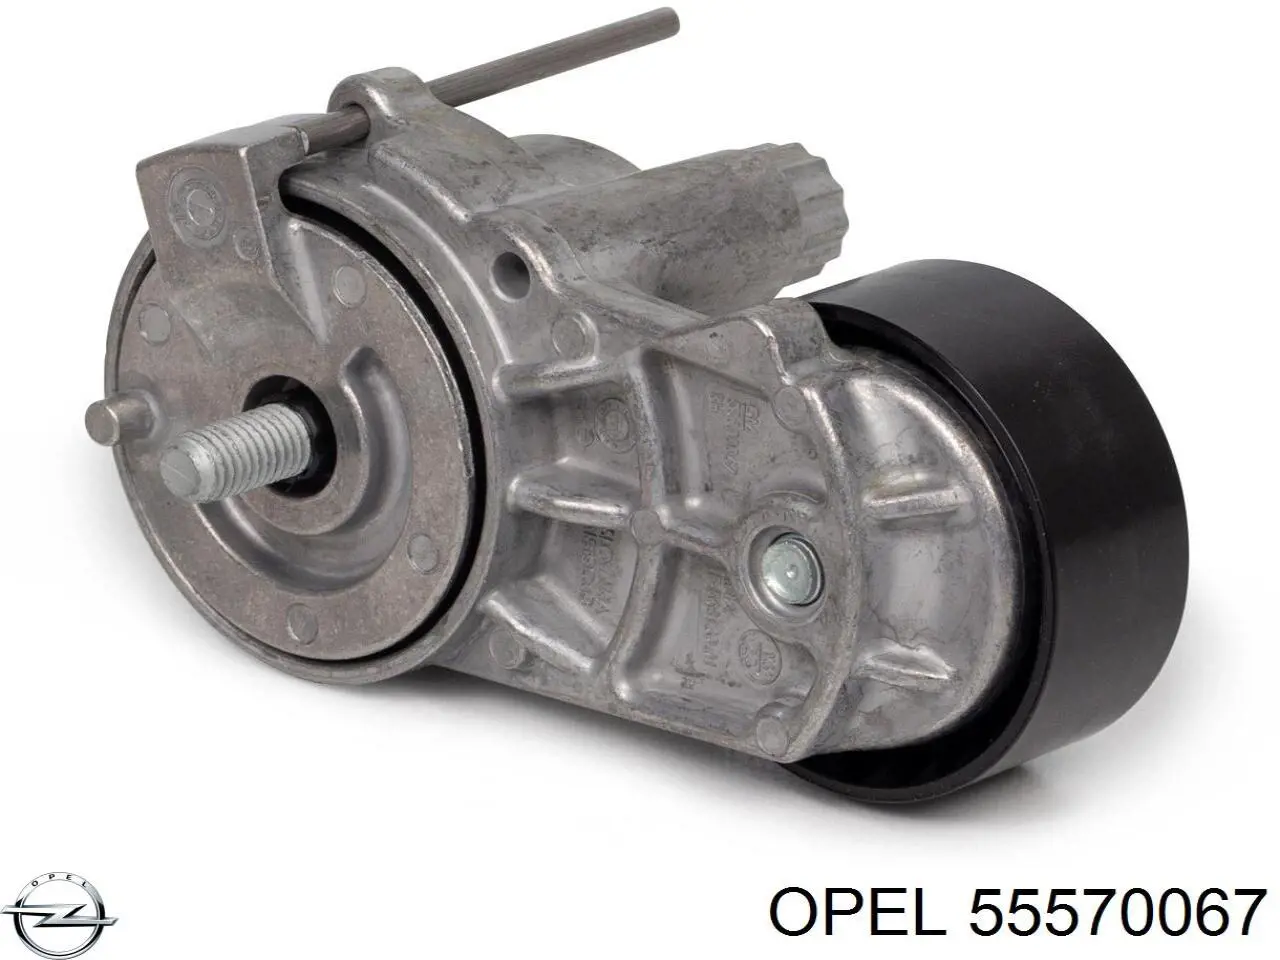 0636289 Opel tensor de correa, correa poli v